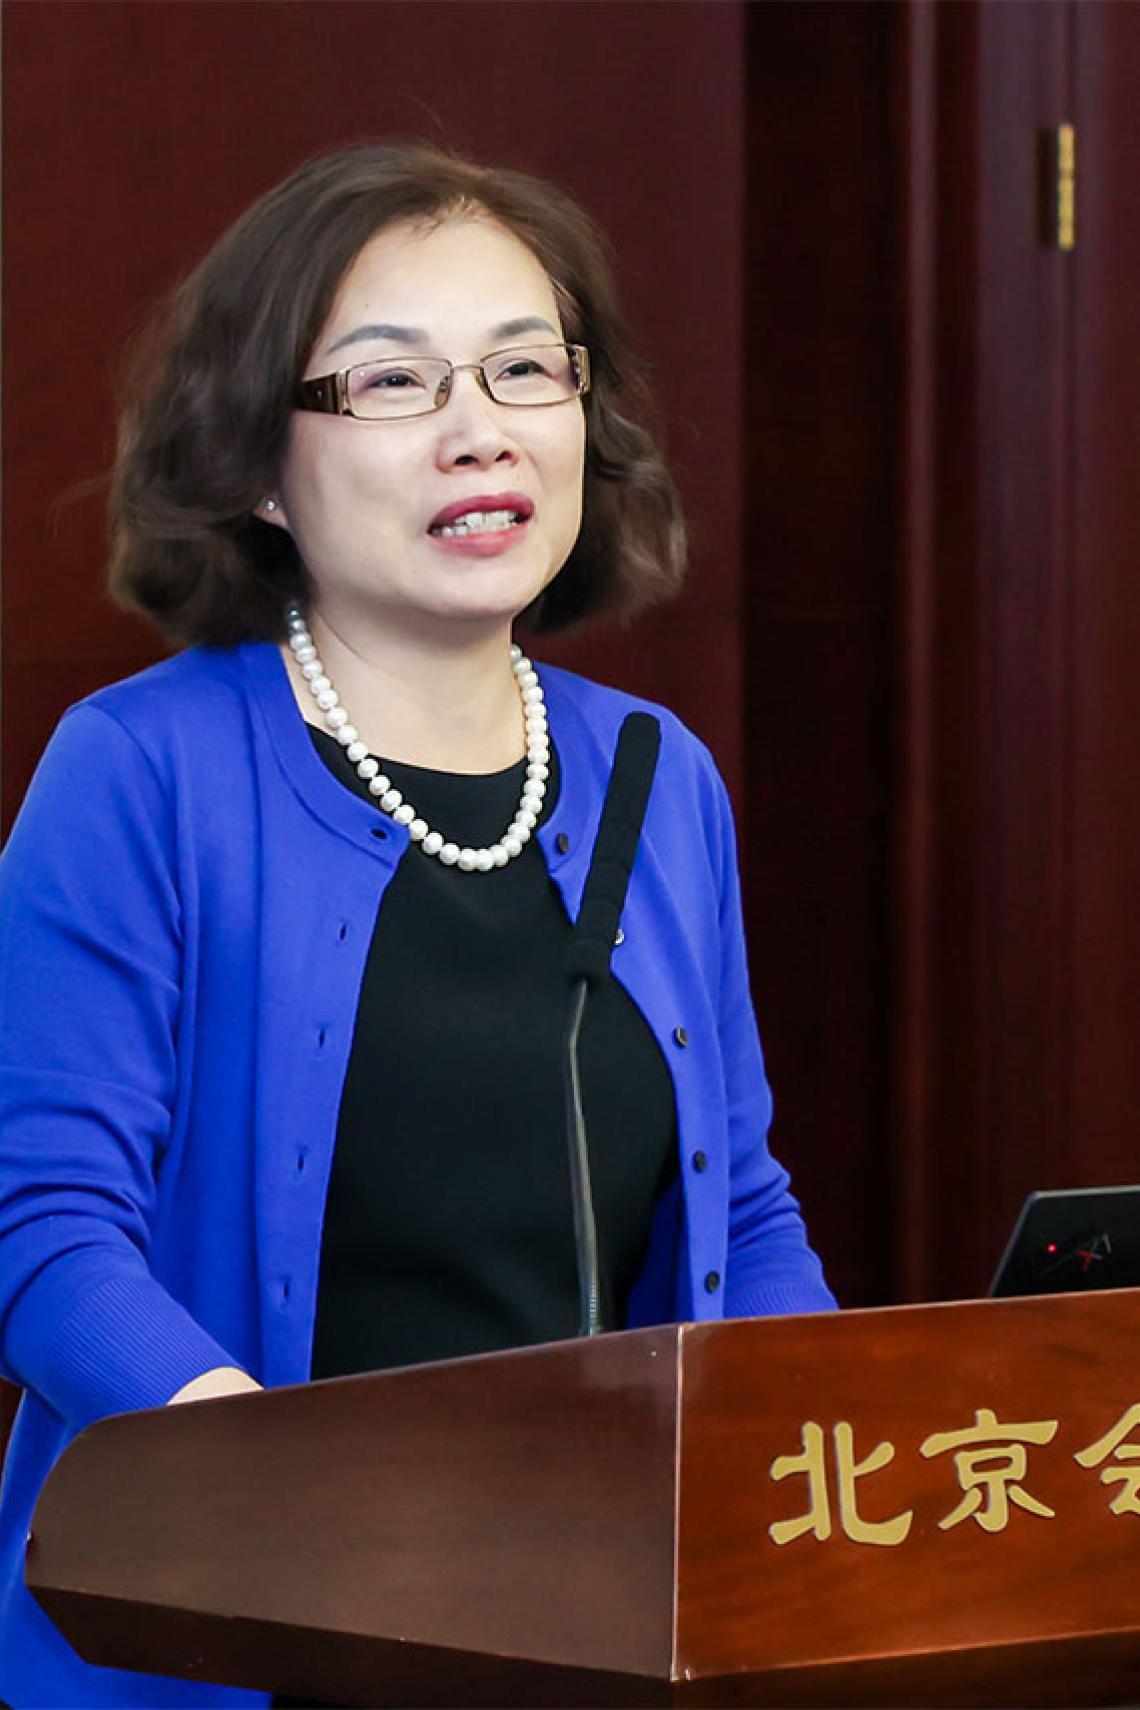 Professor Xiaolan Fu speaking at a podium